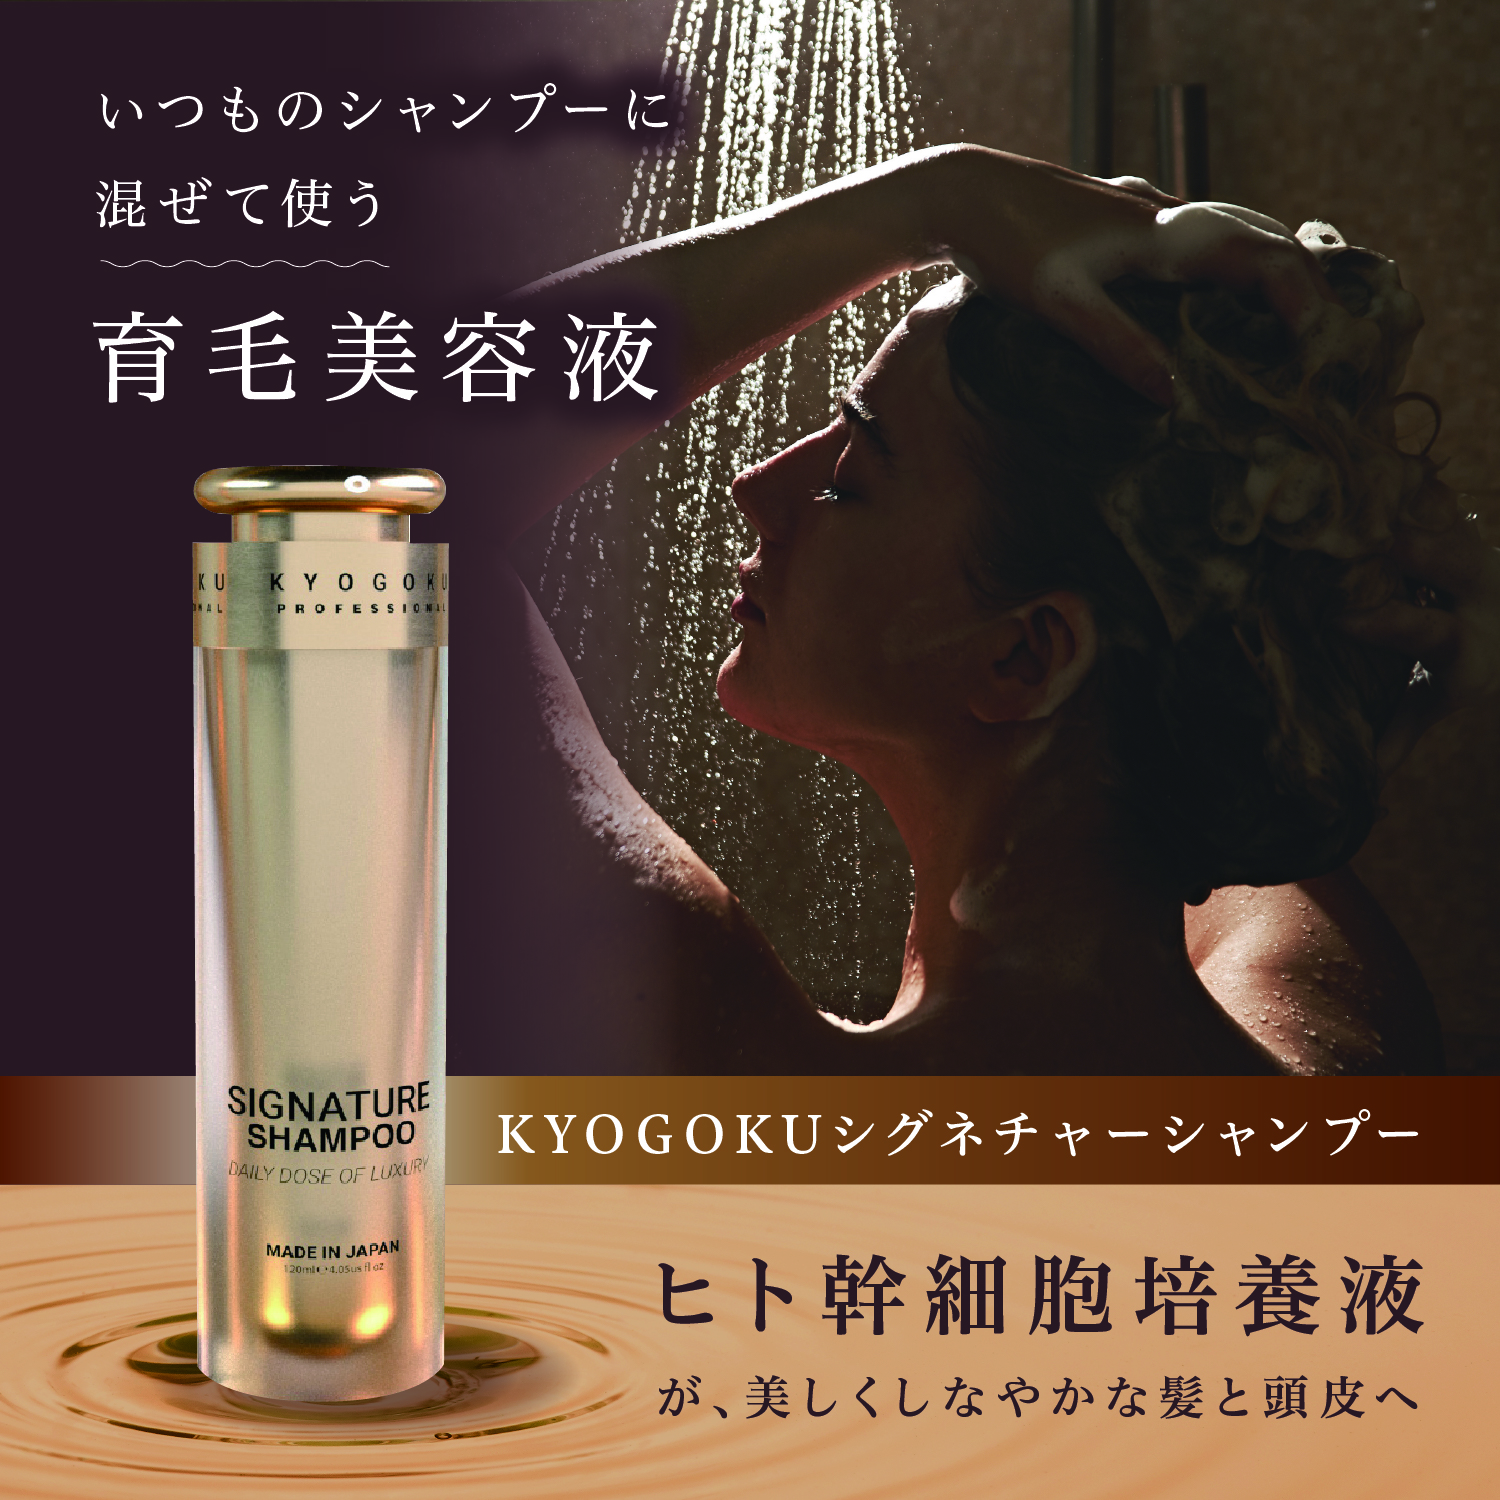 Kyogoku Professional / ランダム商品